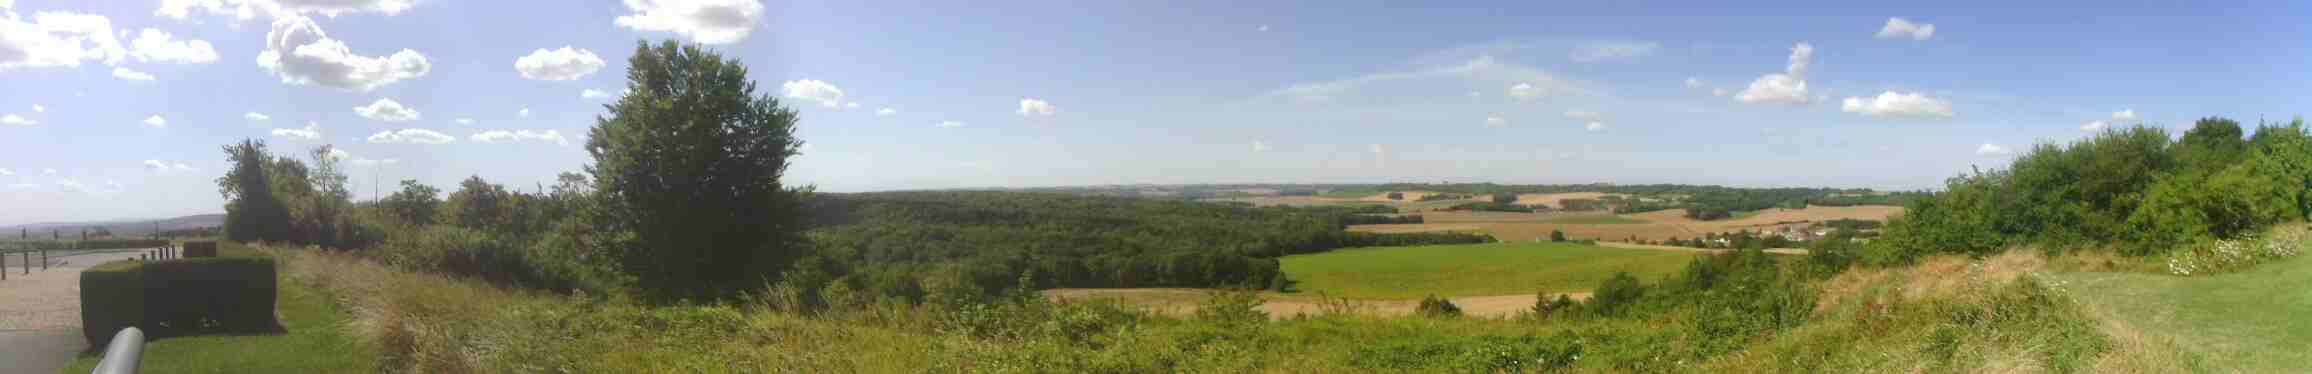 Aisne Valley